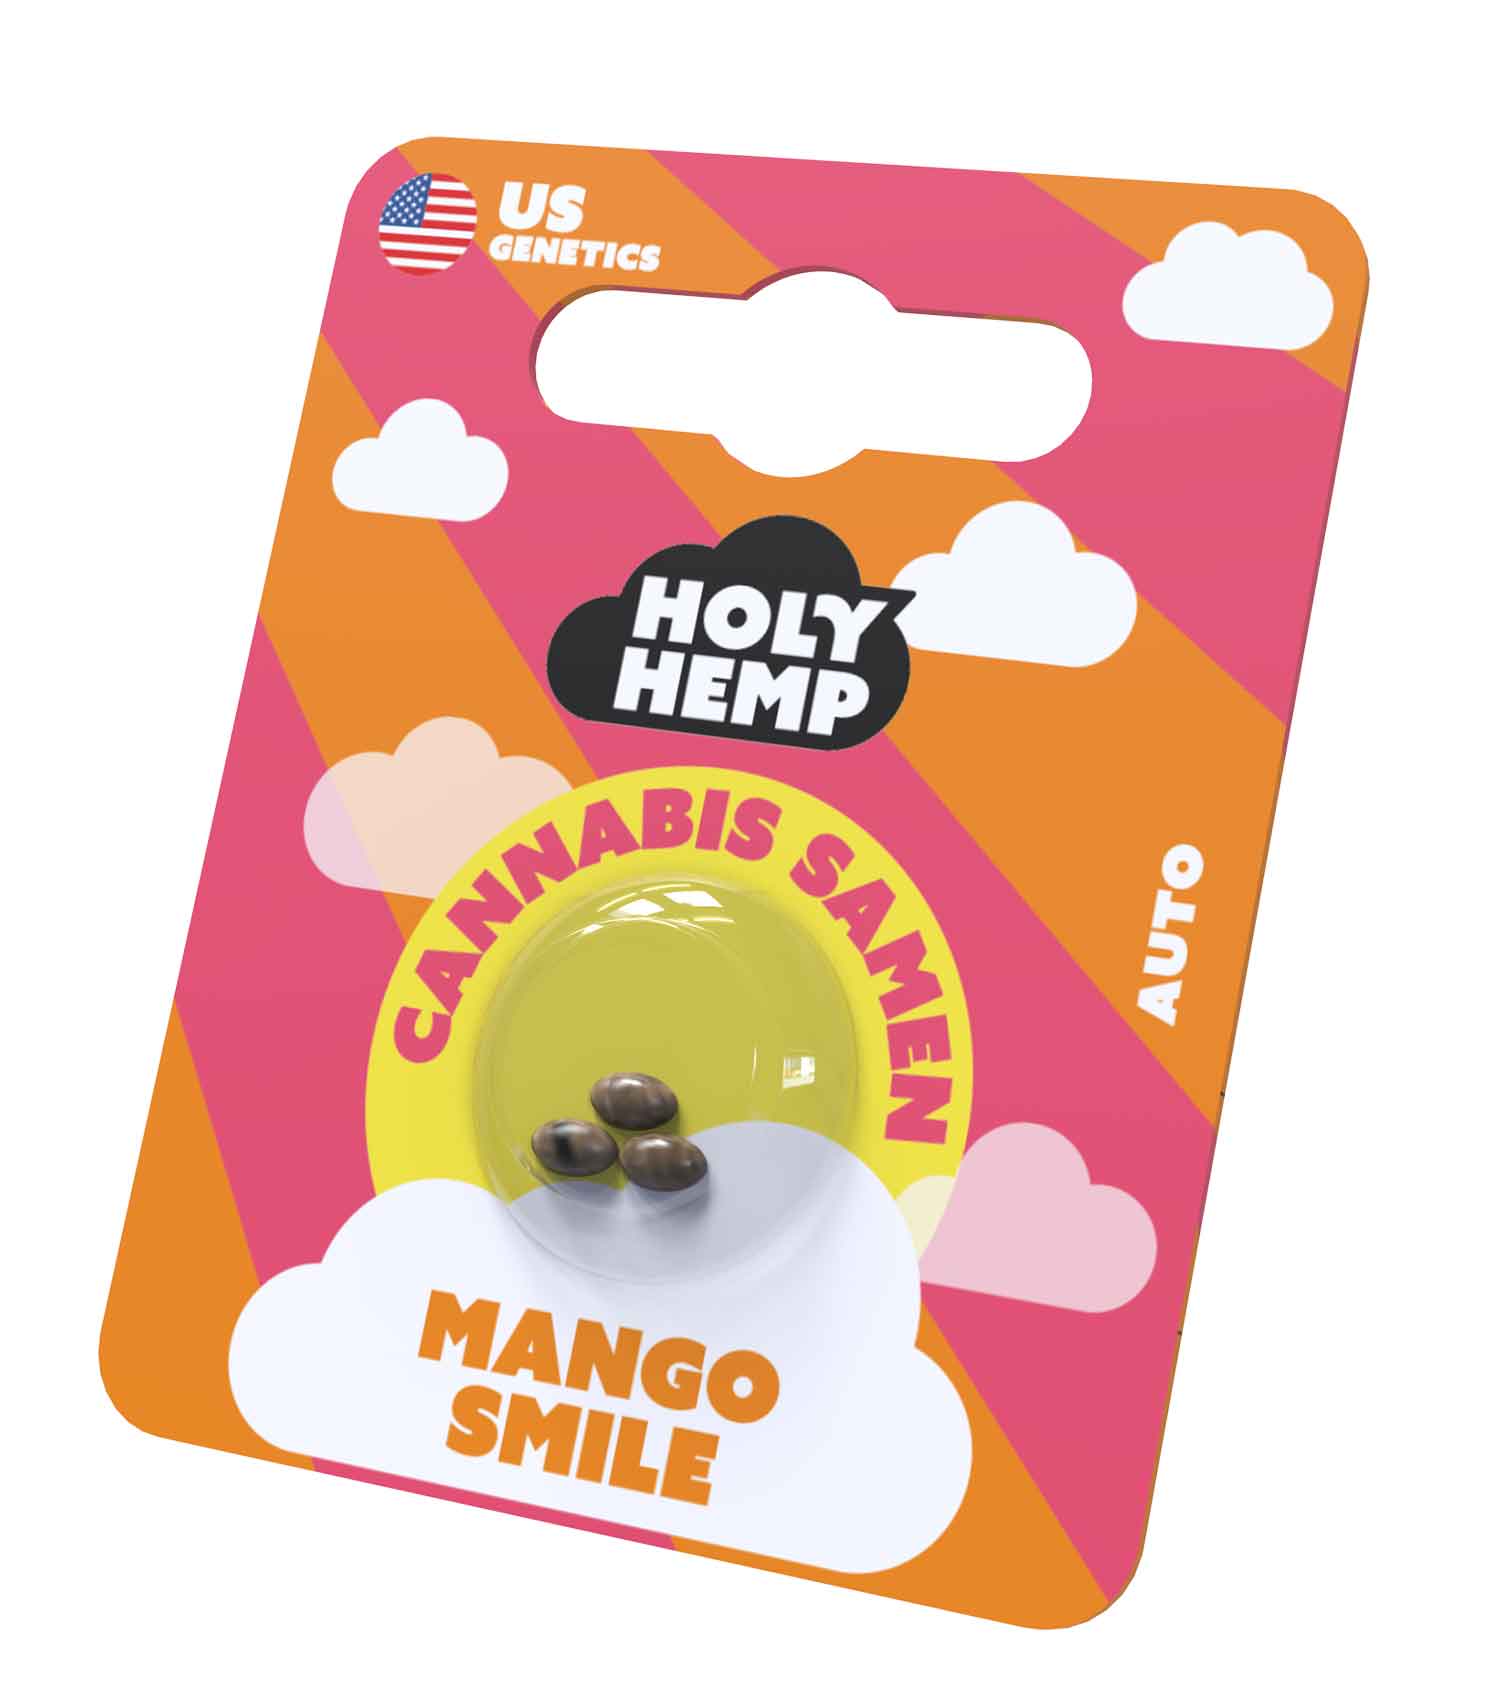 Mango Smile Cannabissamen